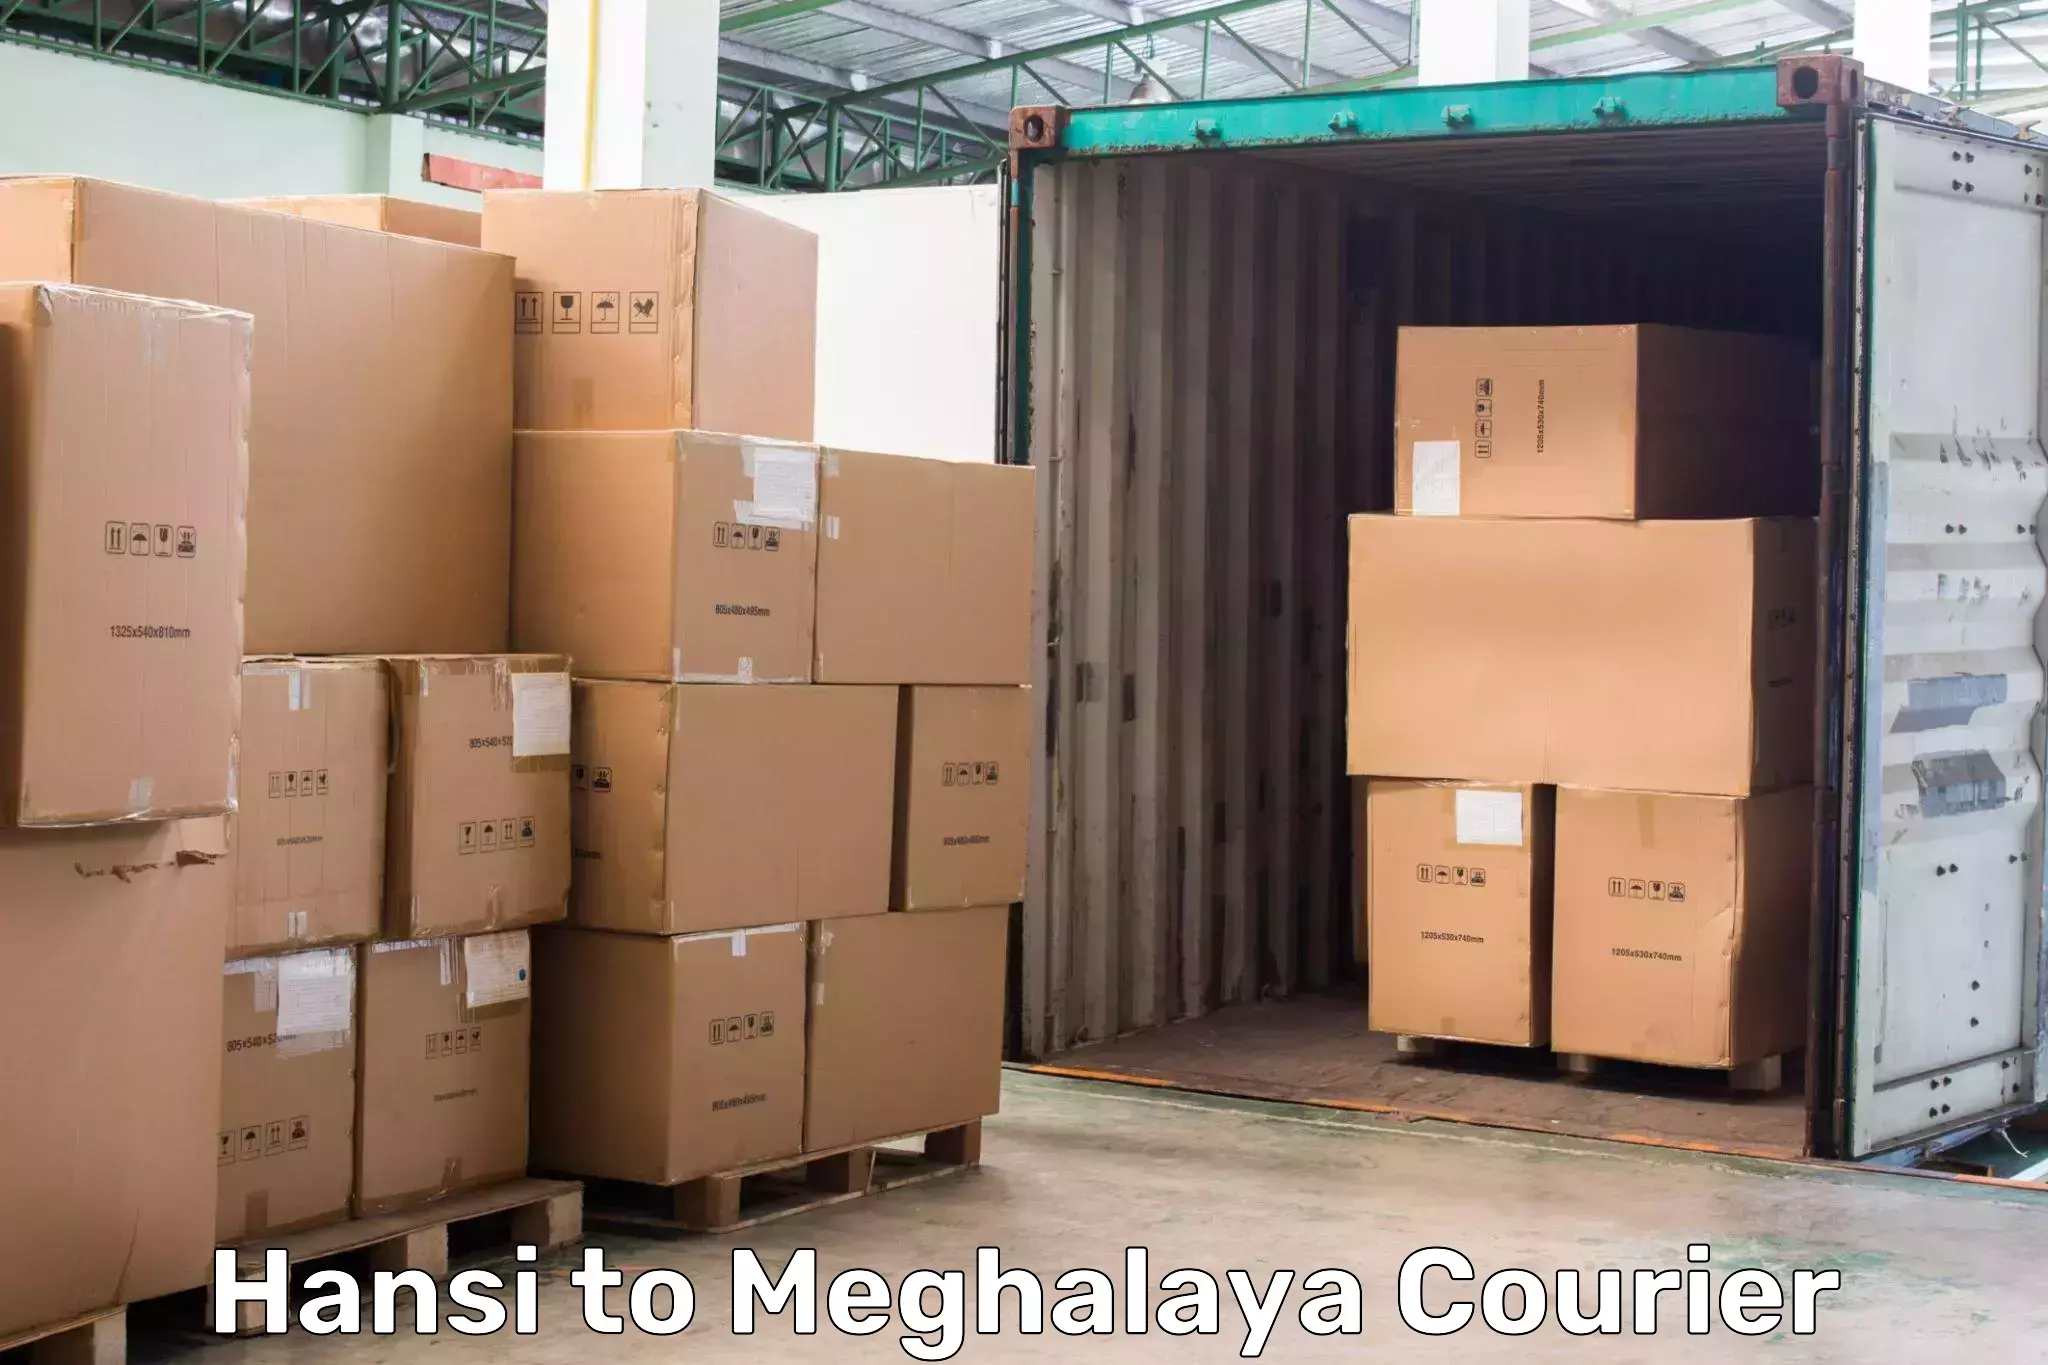 Courier service innovation Hansi to Meghalaya